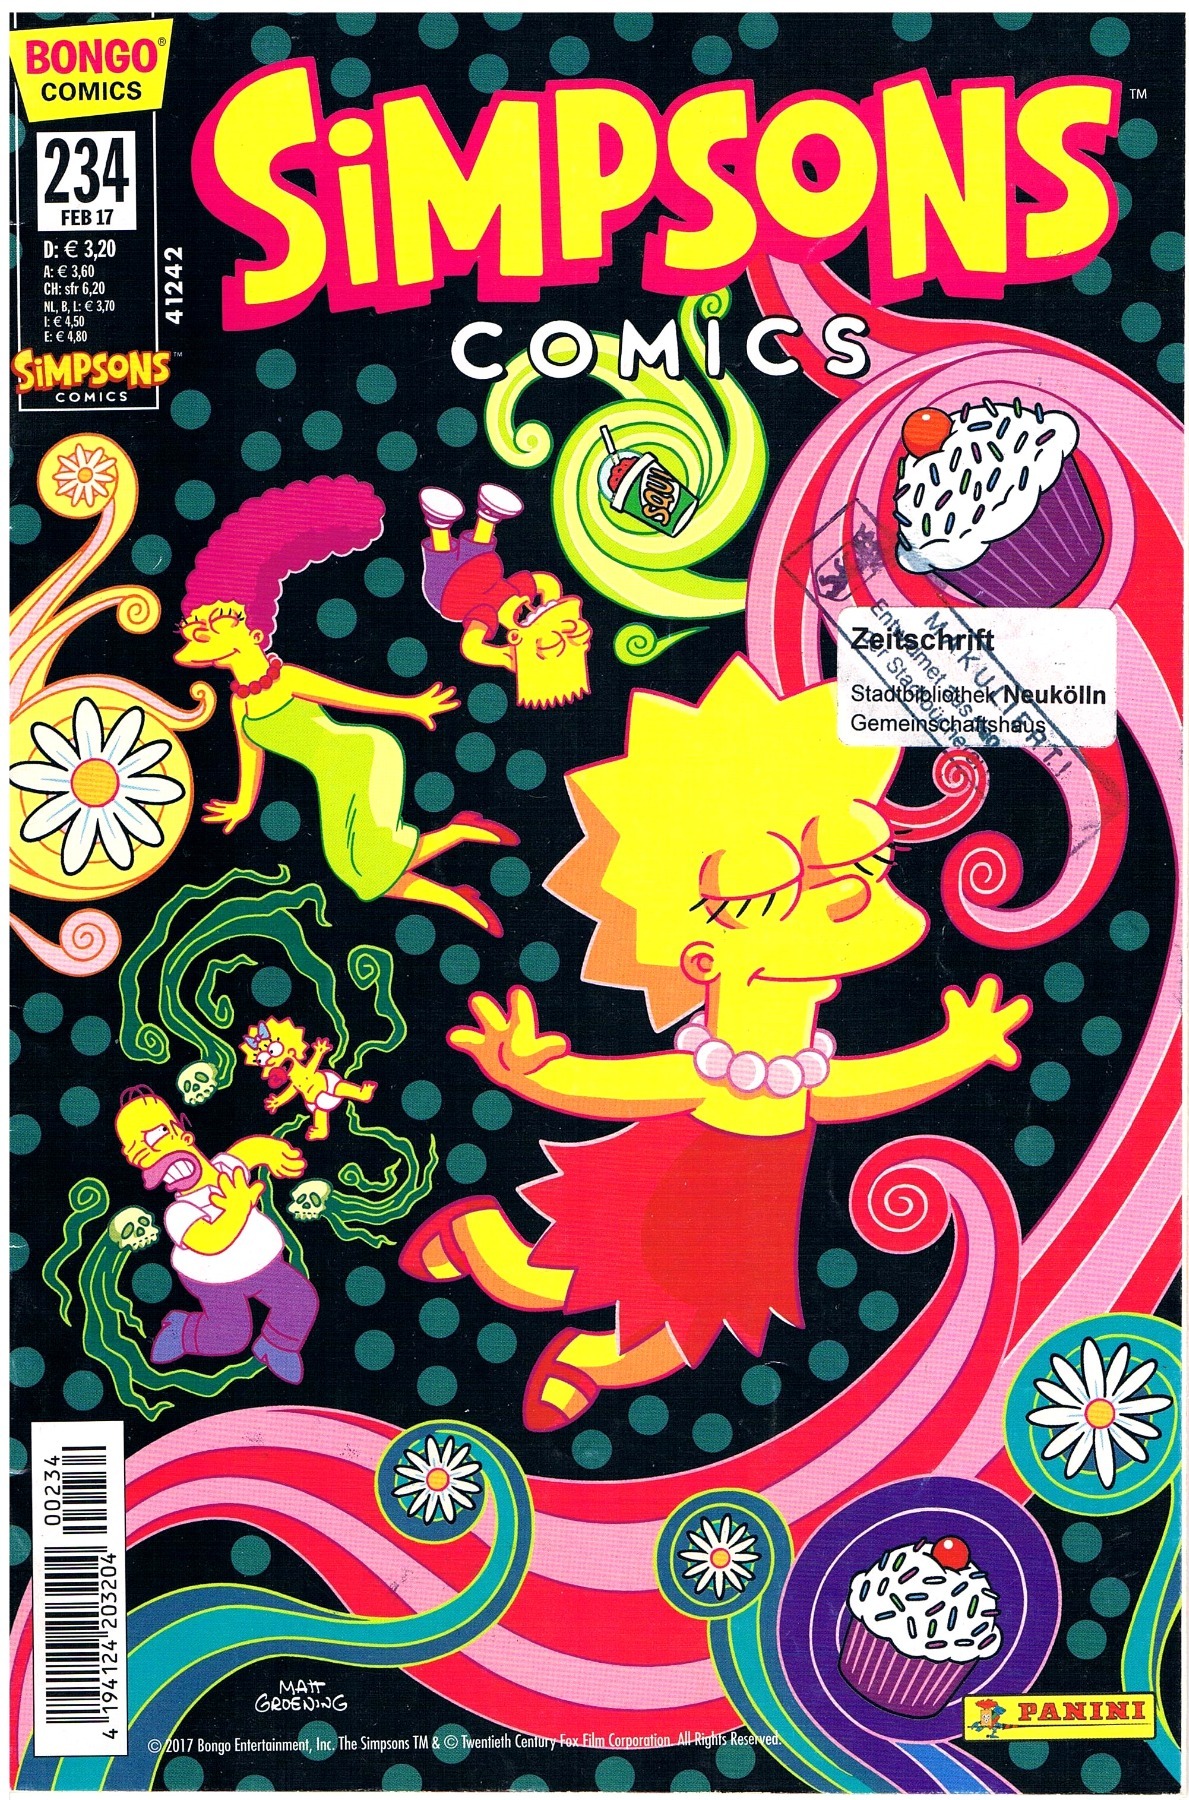 Simpsons Comics - Issue 234 - Feb 17 2017